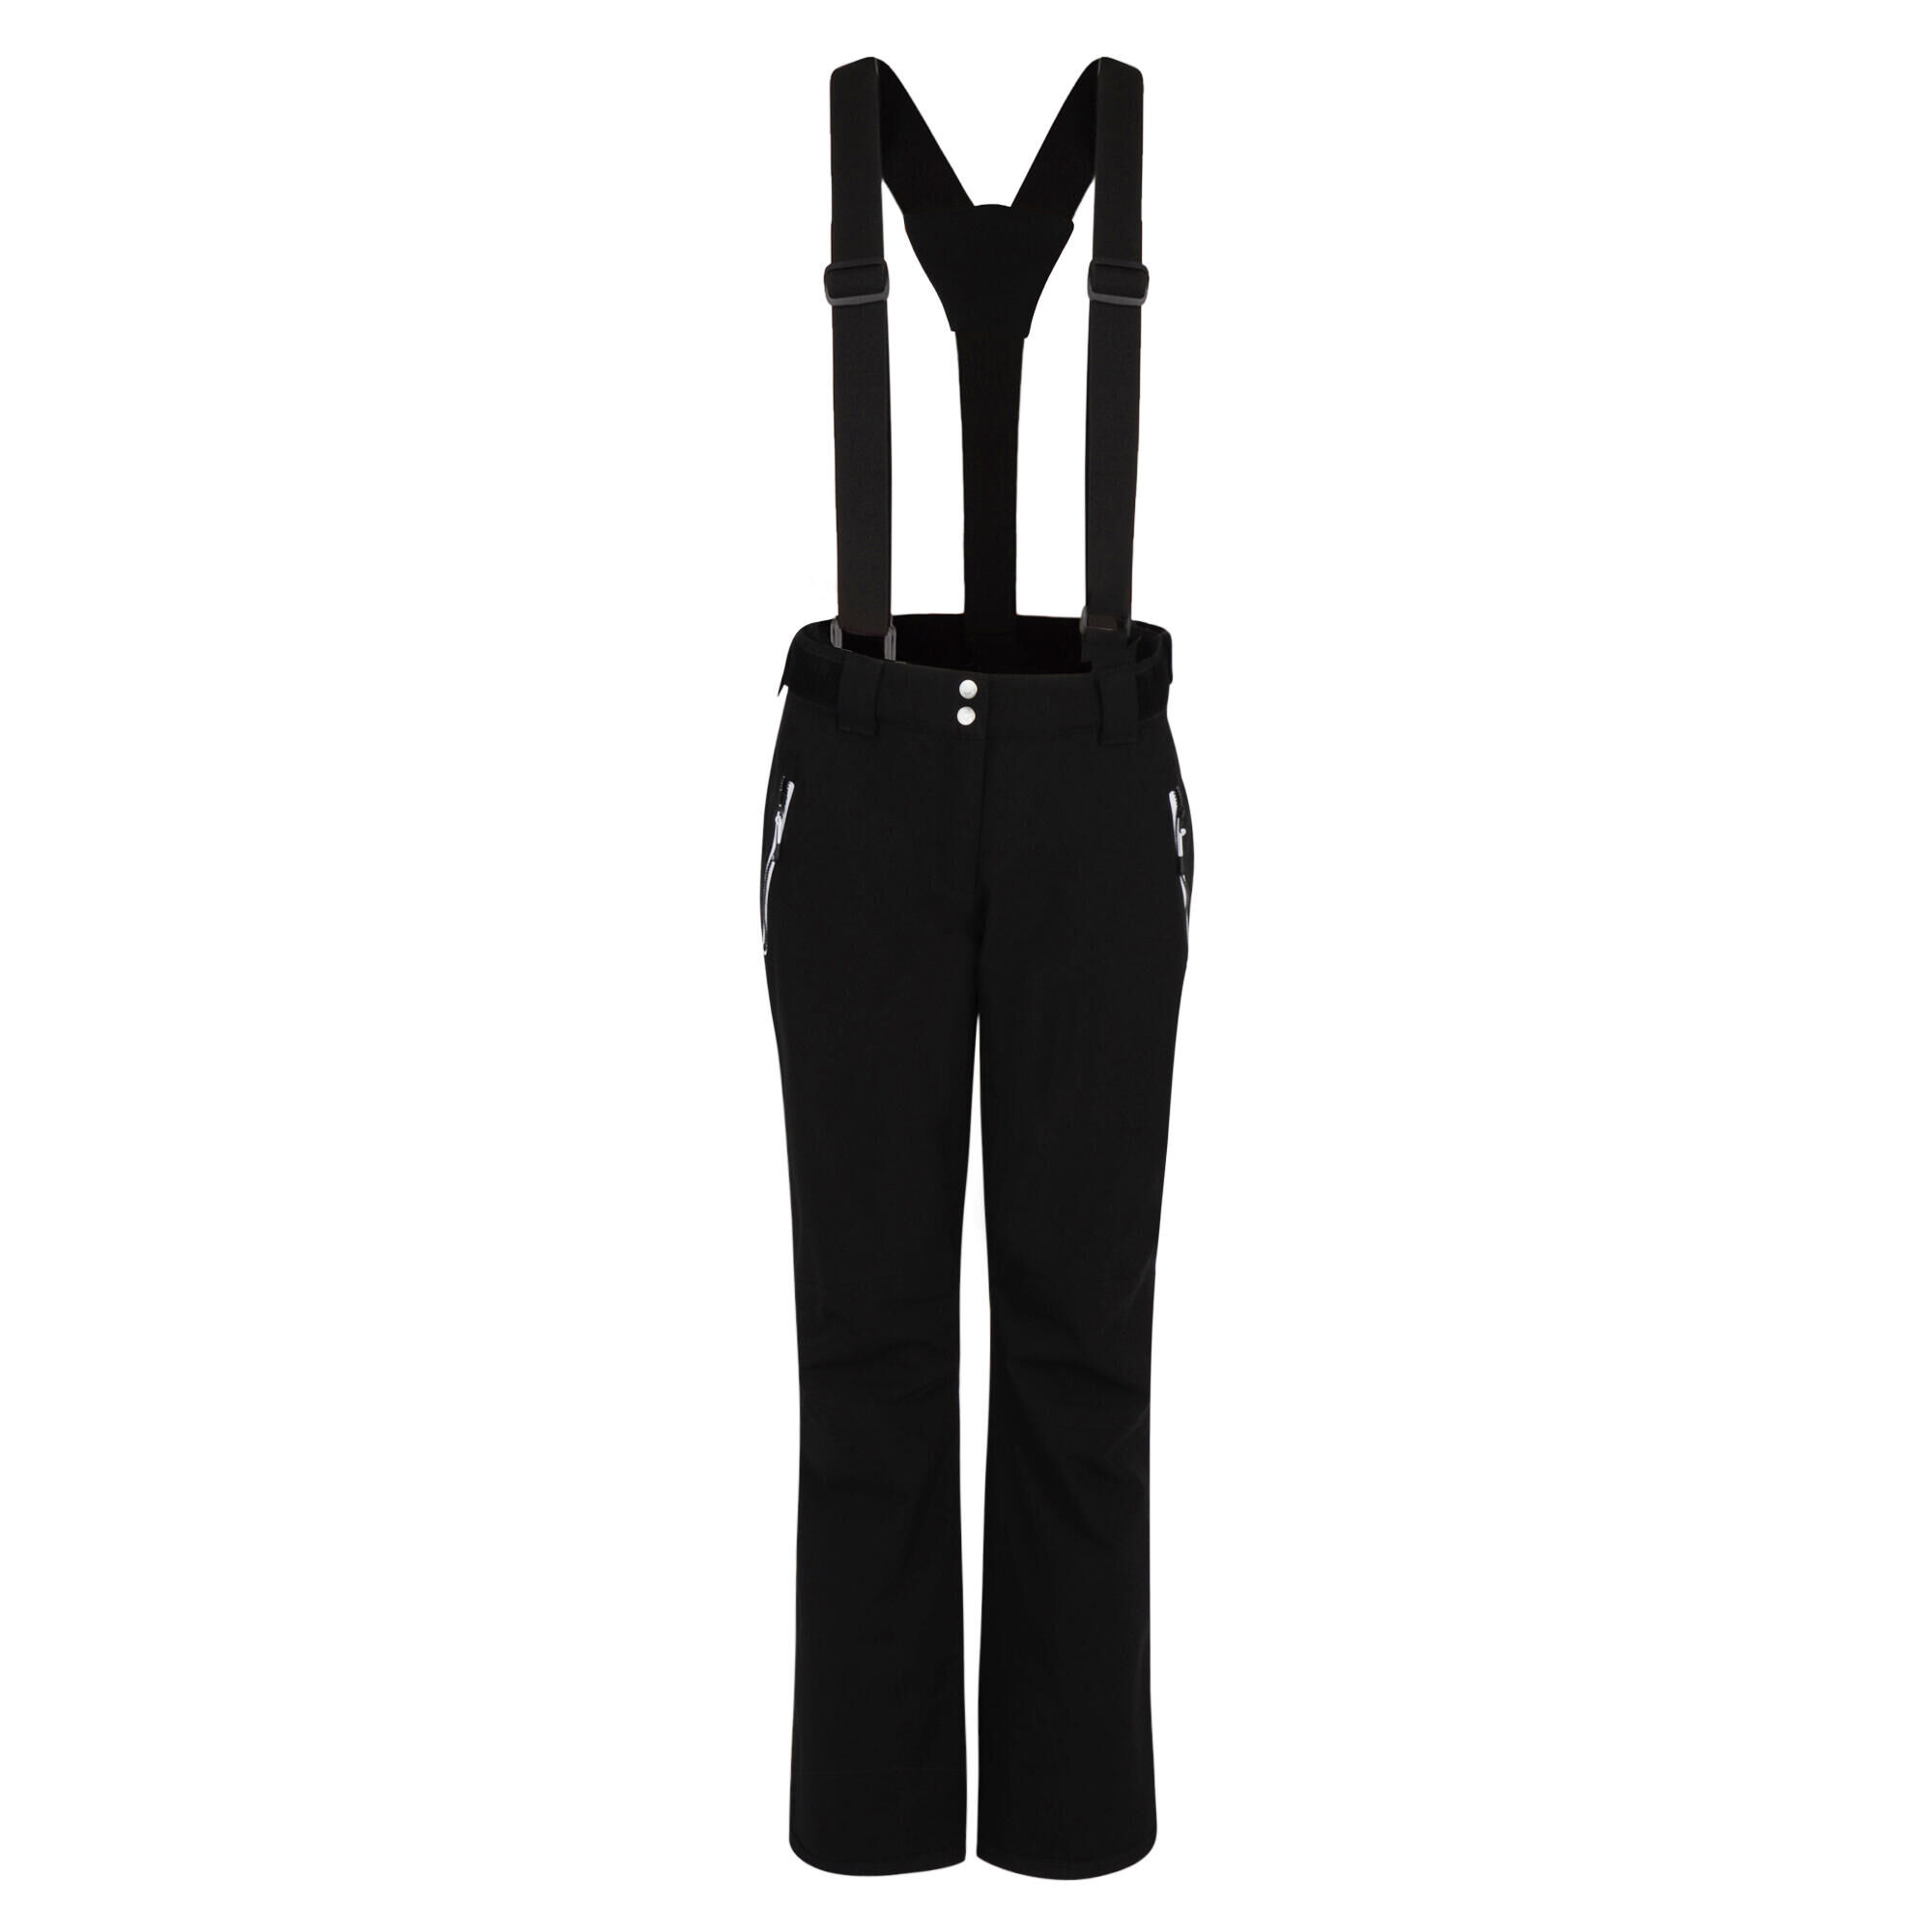 DARE 2B Effused Women's Ski Pants - Insulated - Black